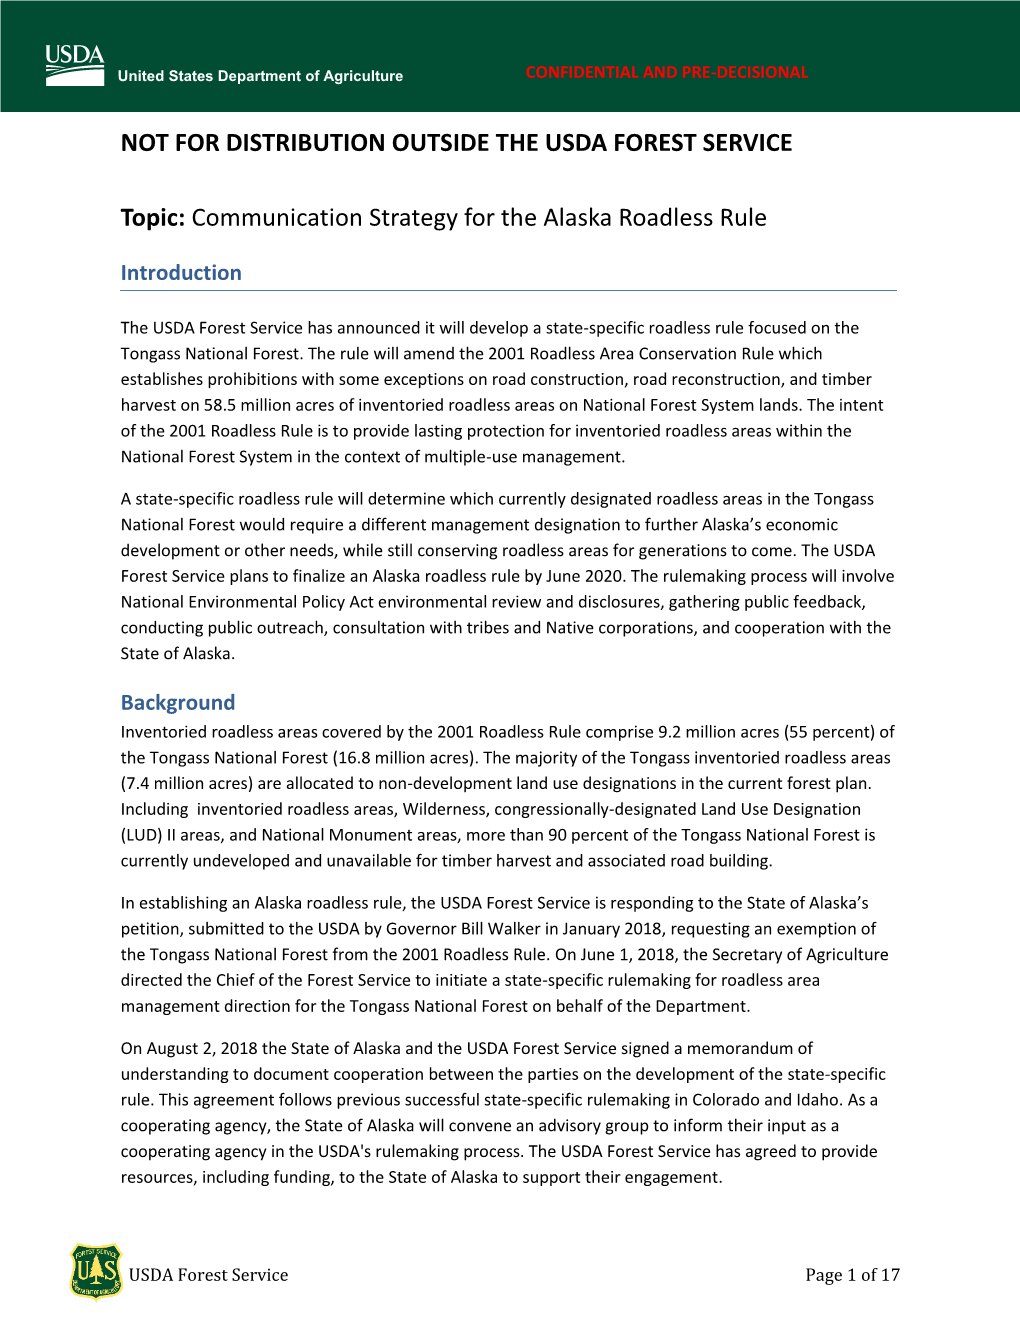 Communication Strategy for the Alaska Roadless Rule